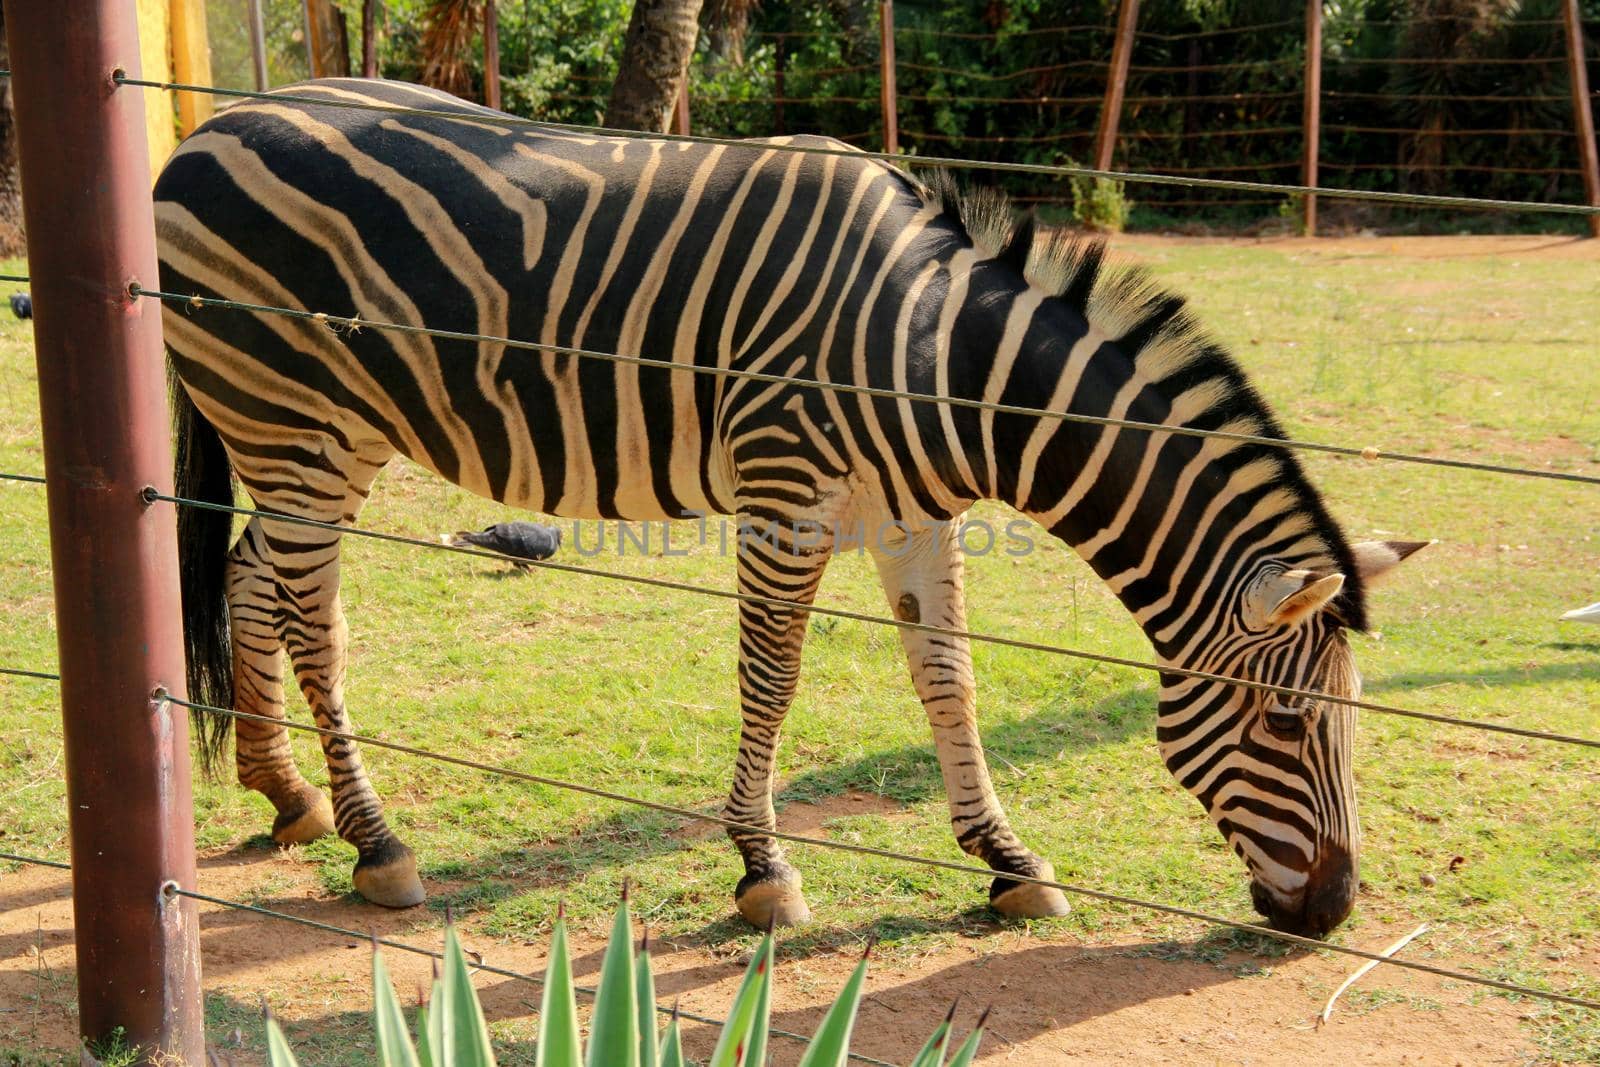 salvador, bahia / brazil - september 22, 2012: zebra is seen in a zoo in the city of Salvador.

